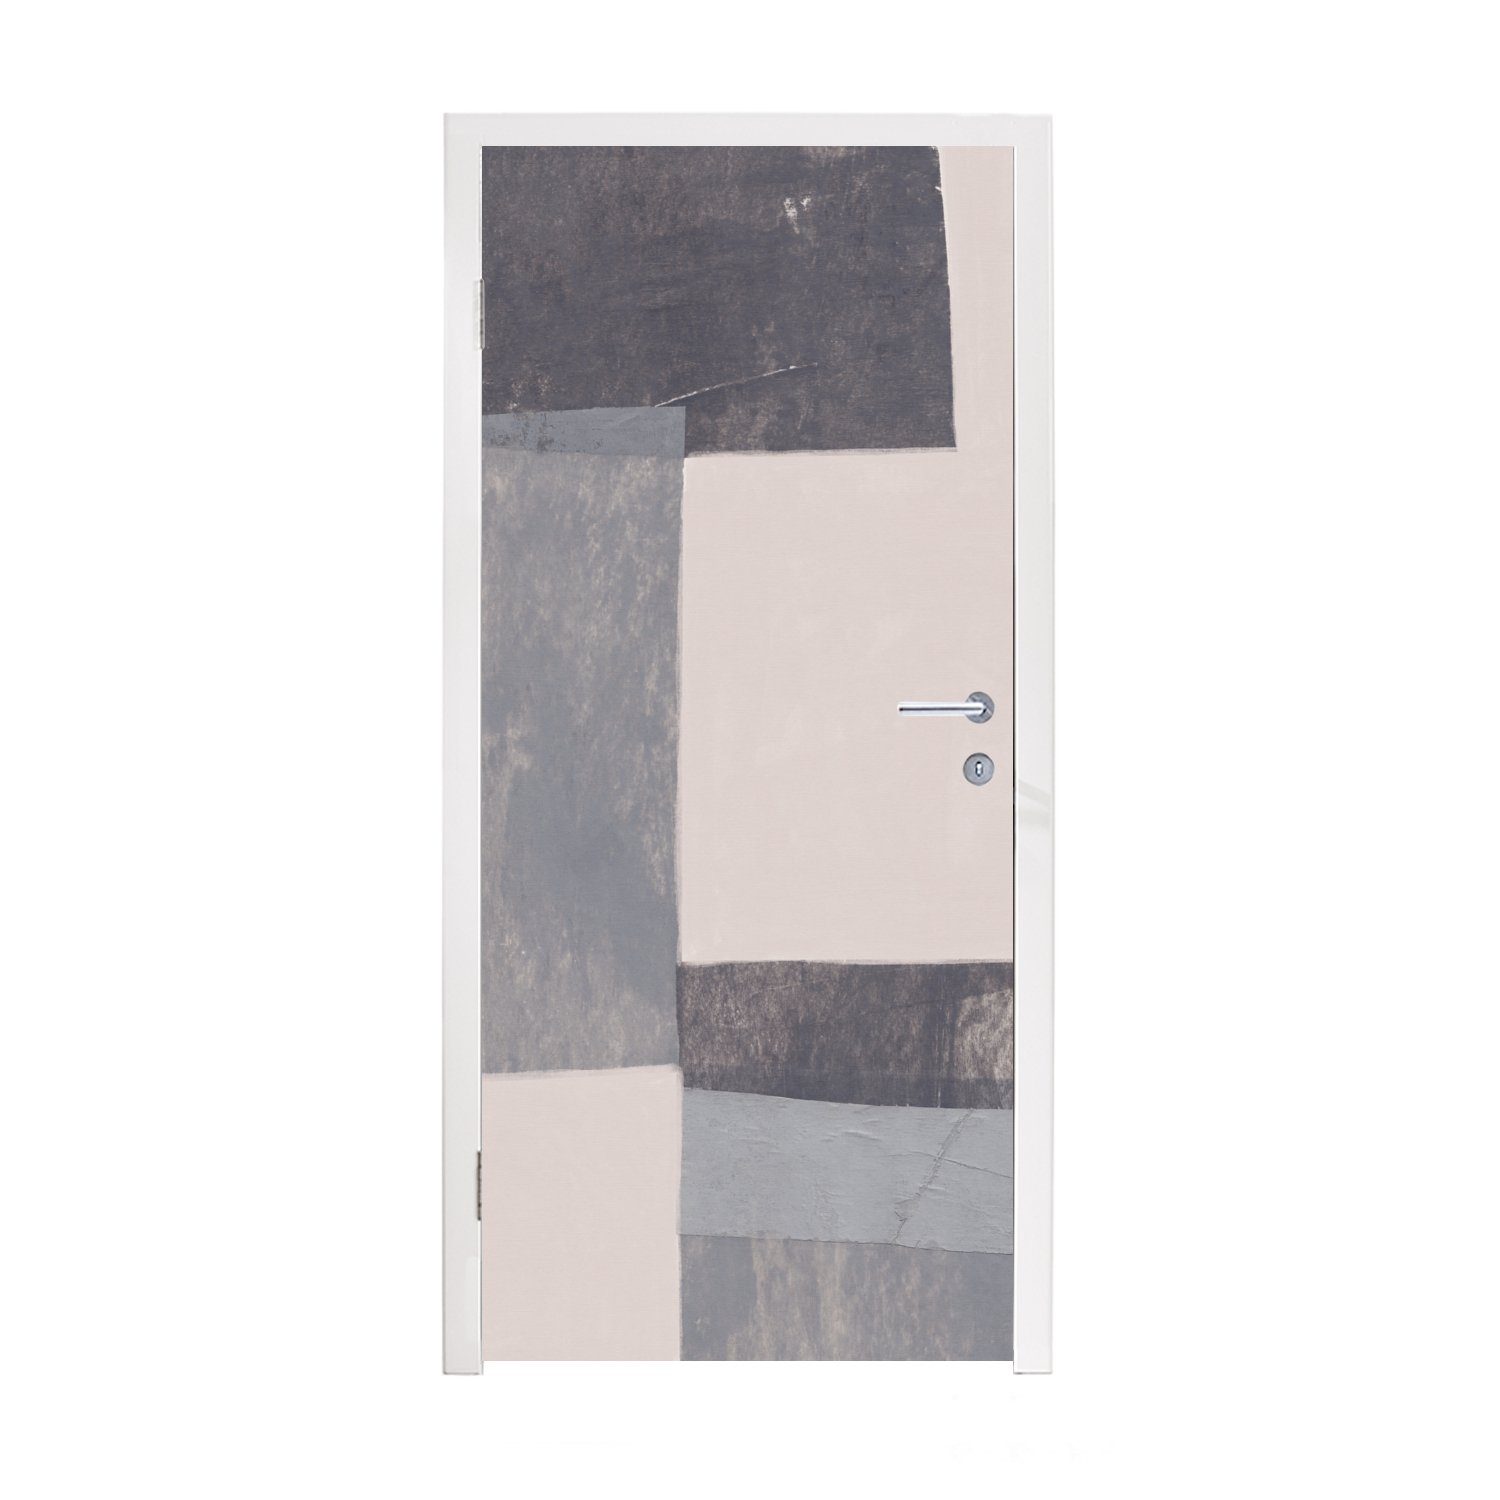 MuchoWow Türtapete Geometrie - Formen - Grau - Würfel, Matt, bedruckt, (1 St), Fototapete für Tür, Türaufkleber, 75x205 cm